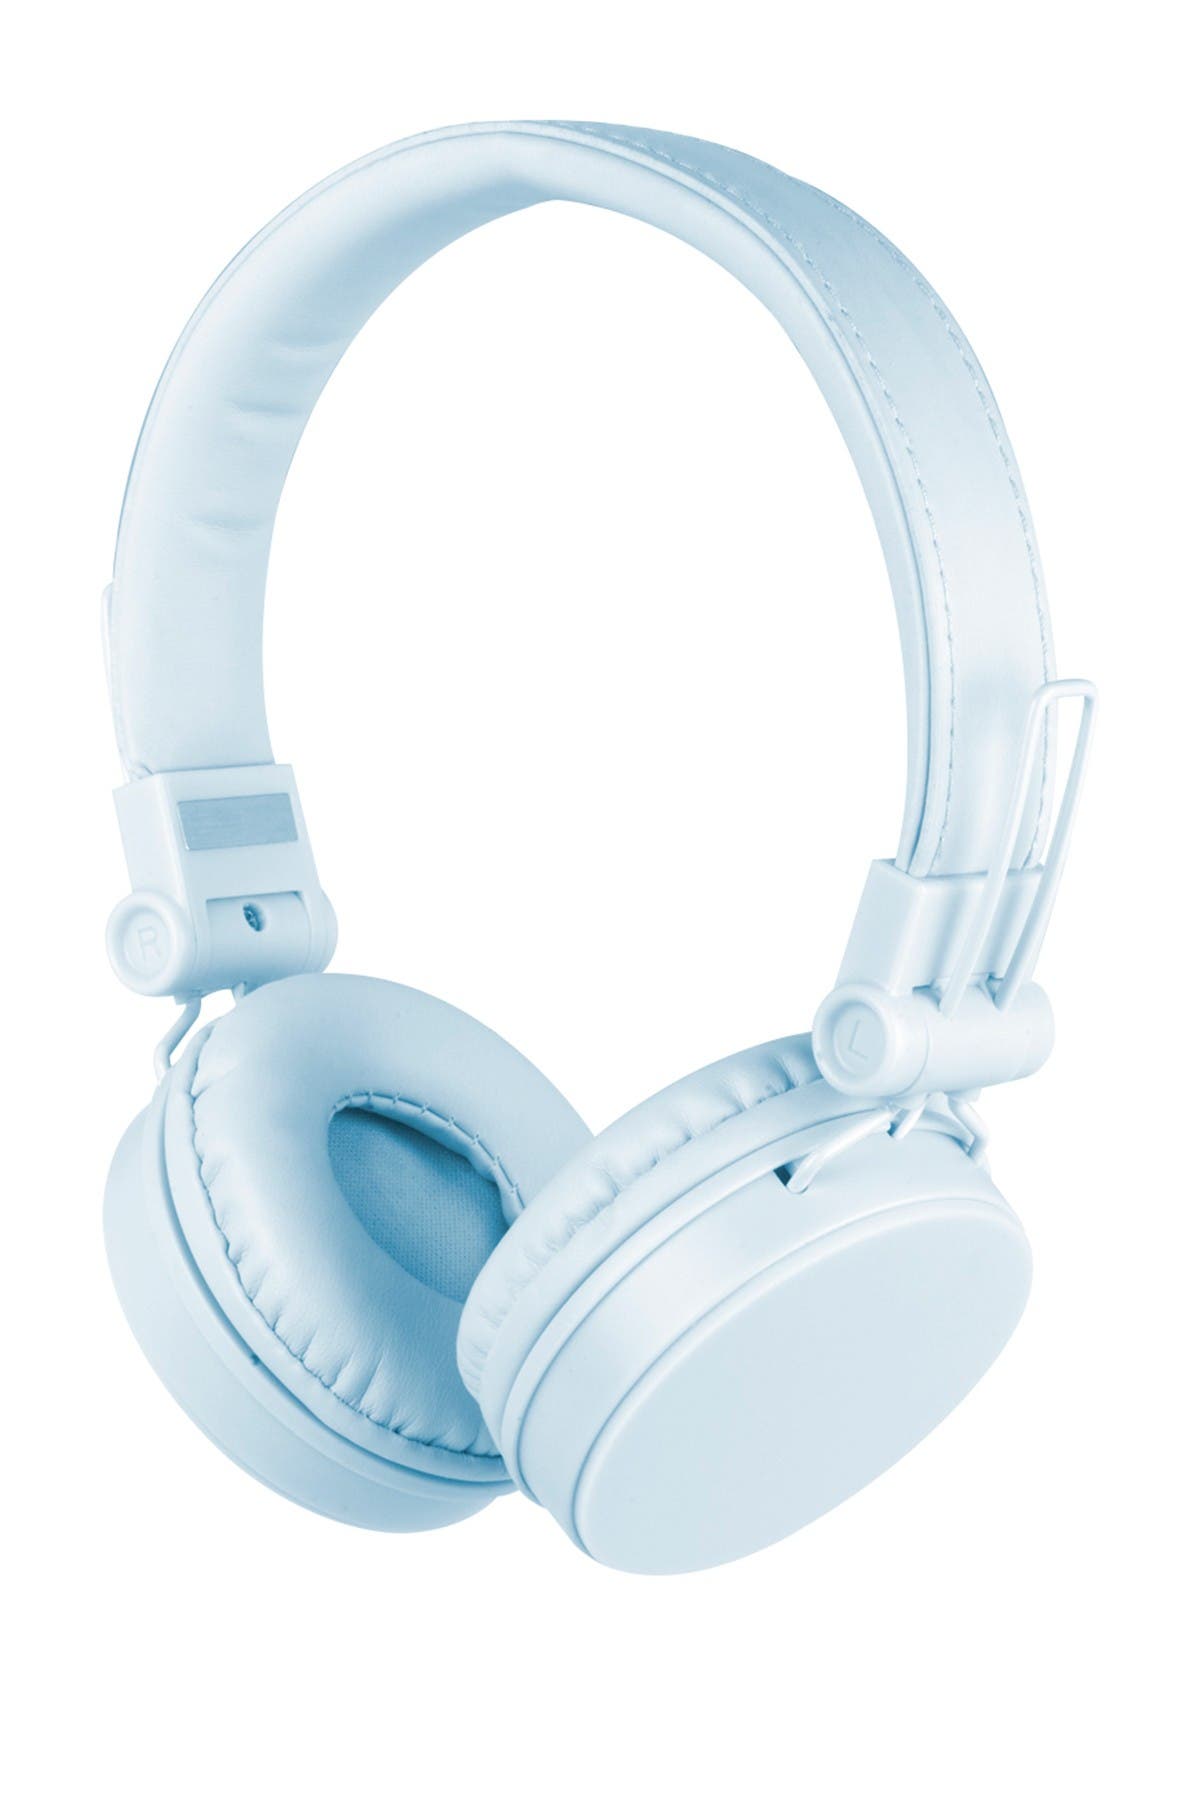 Cylo Baby Blue Aux Headphones